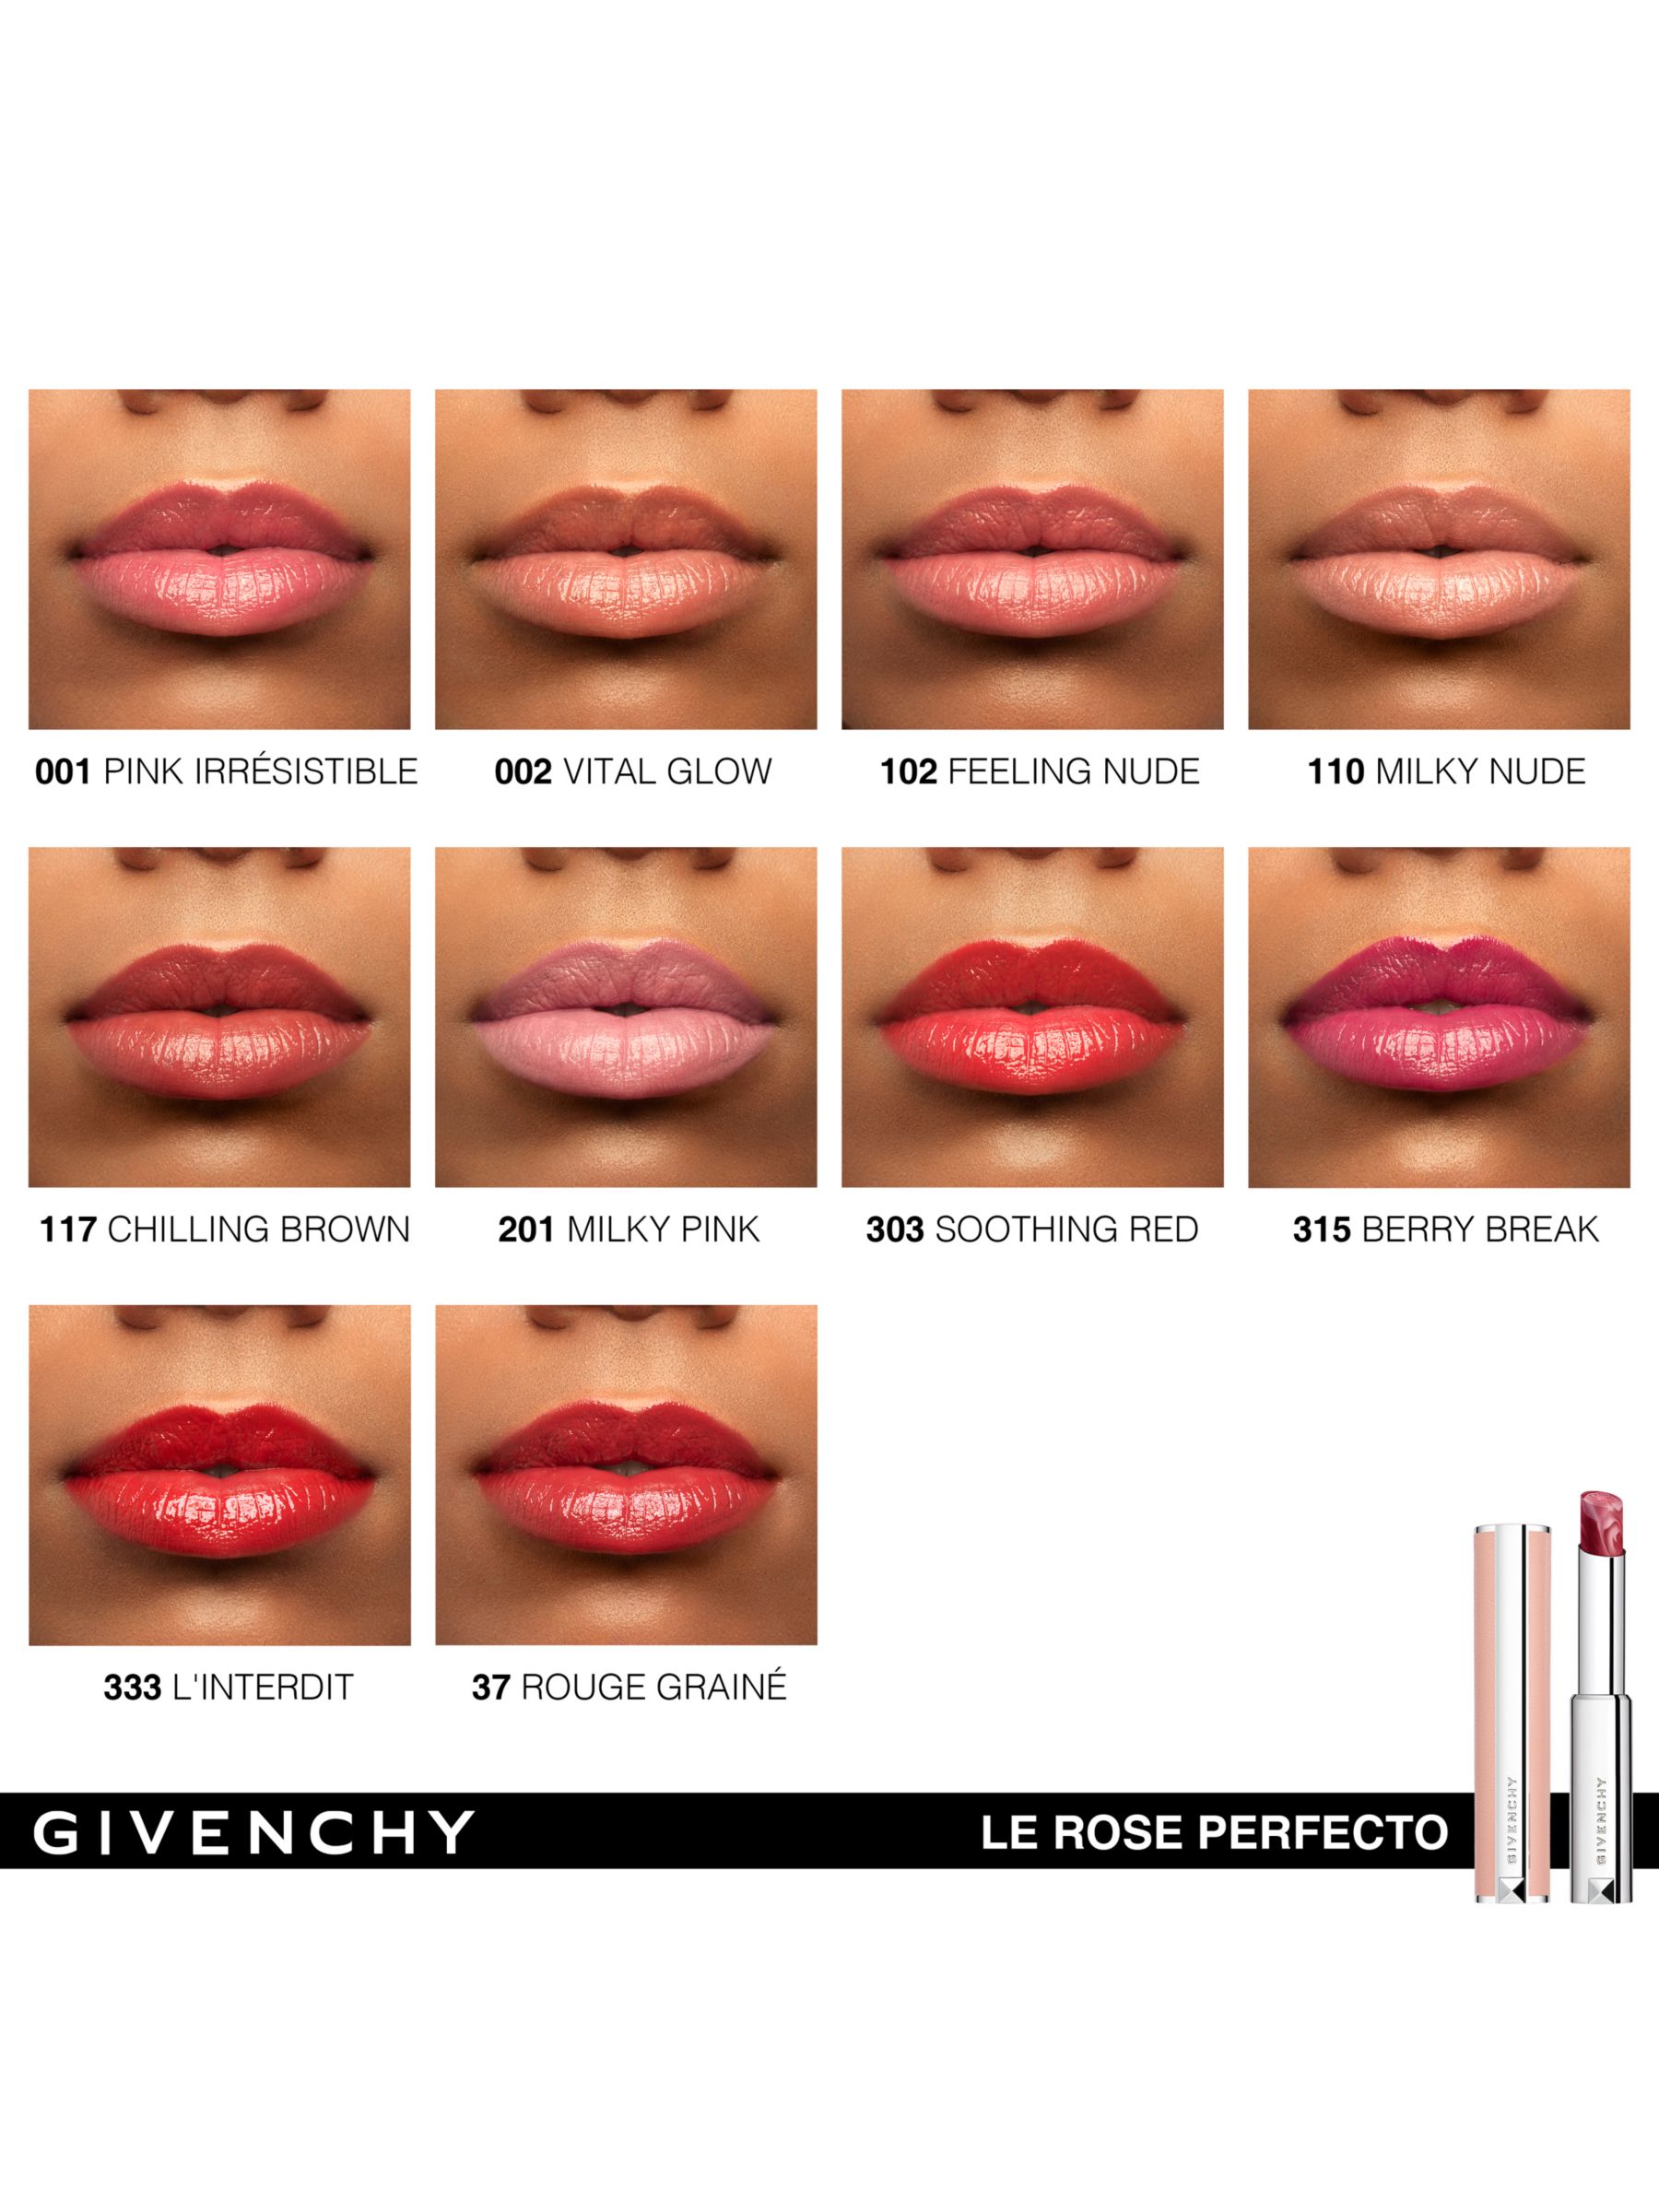 Givenchy Rose Perfecto Beautifying Lip Balm, N333 L'Interdit 5